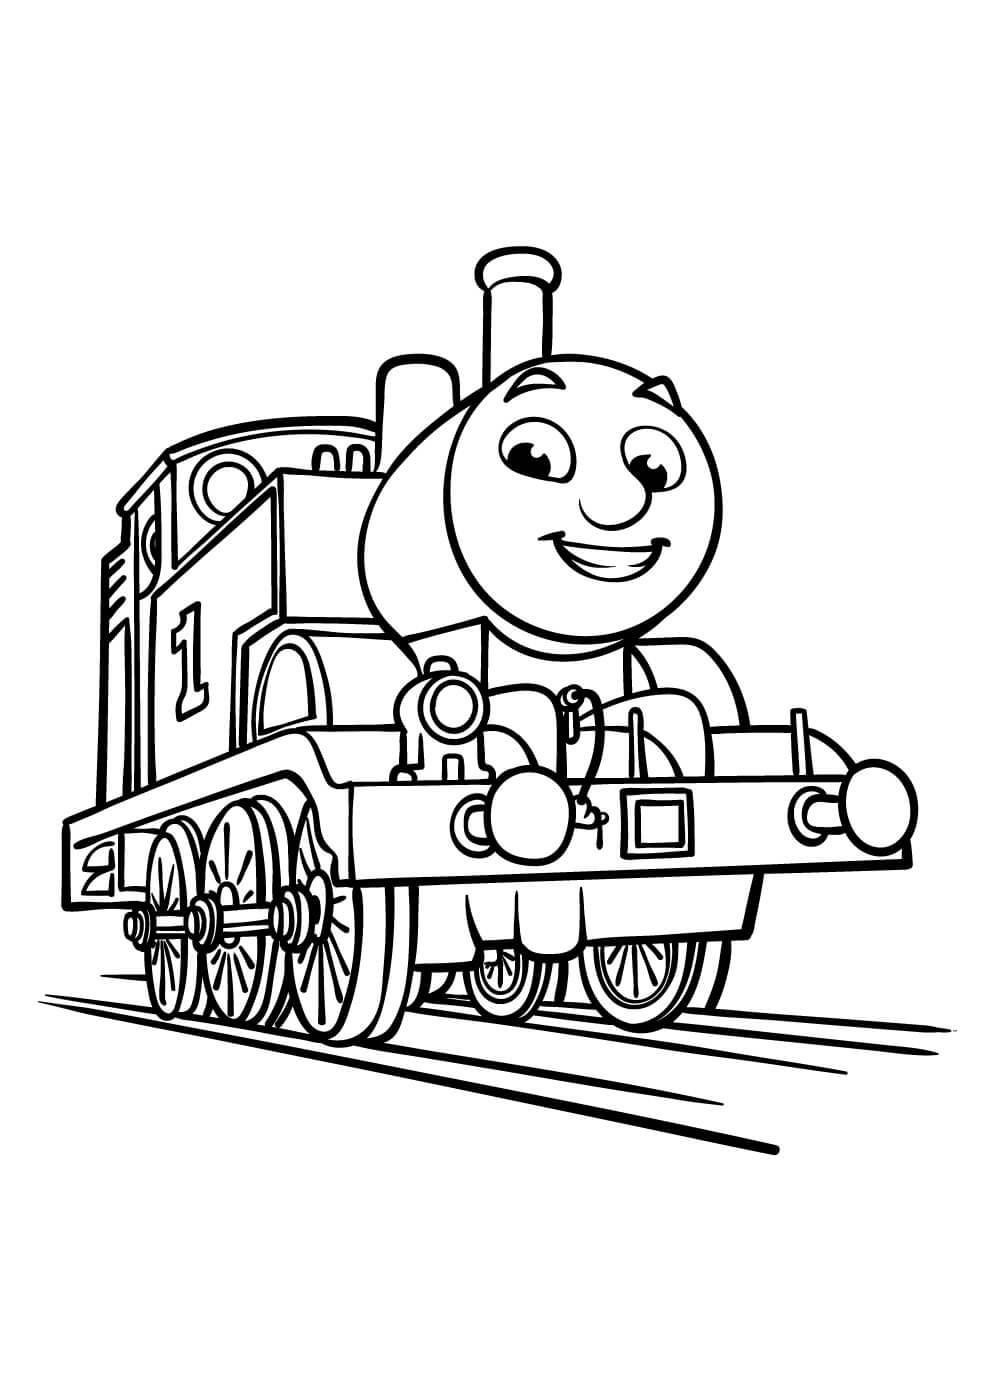 Thomas le Train coloring page